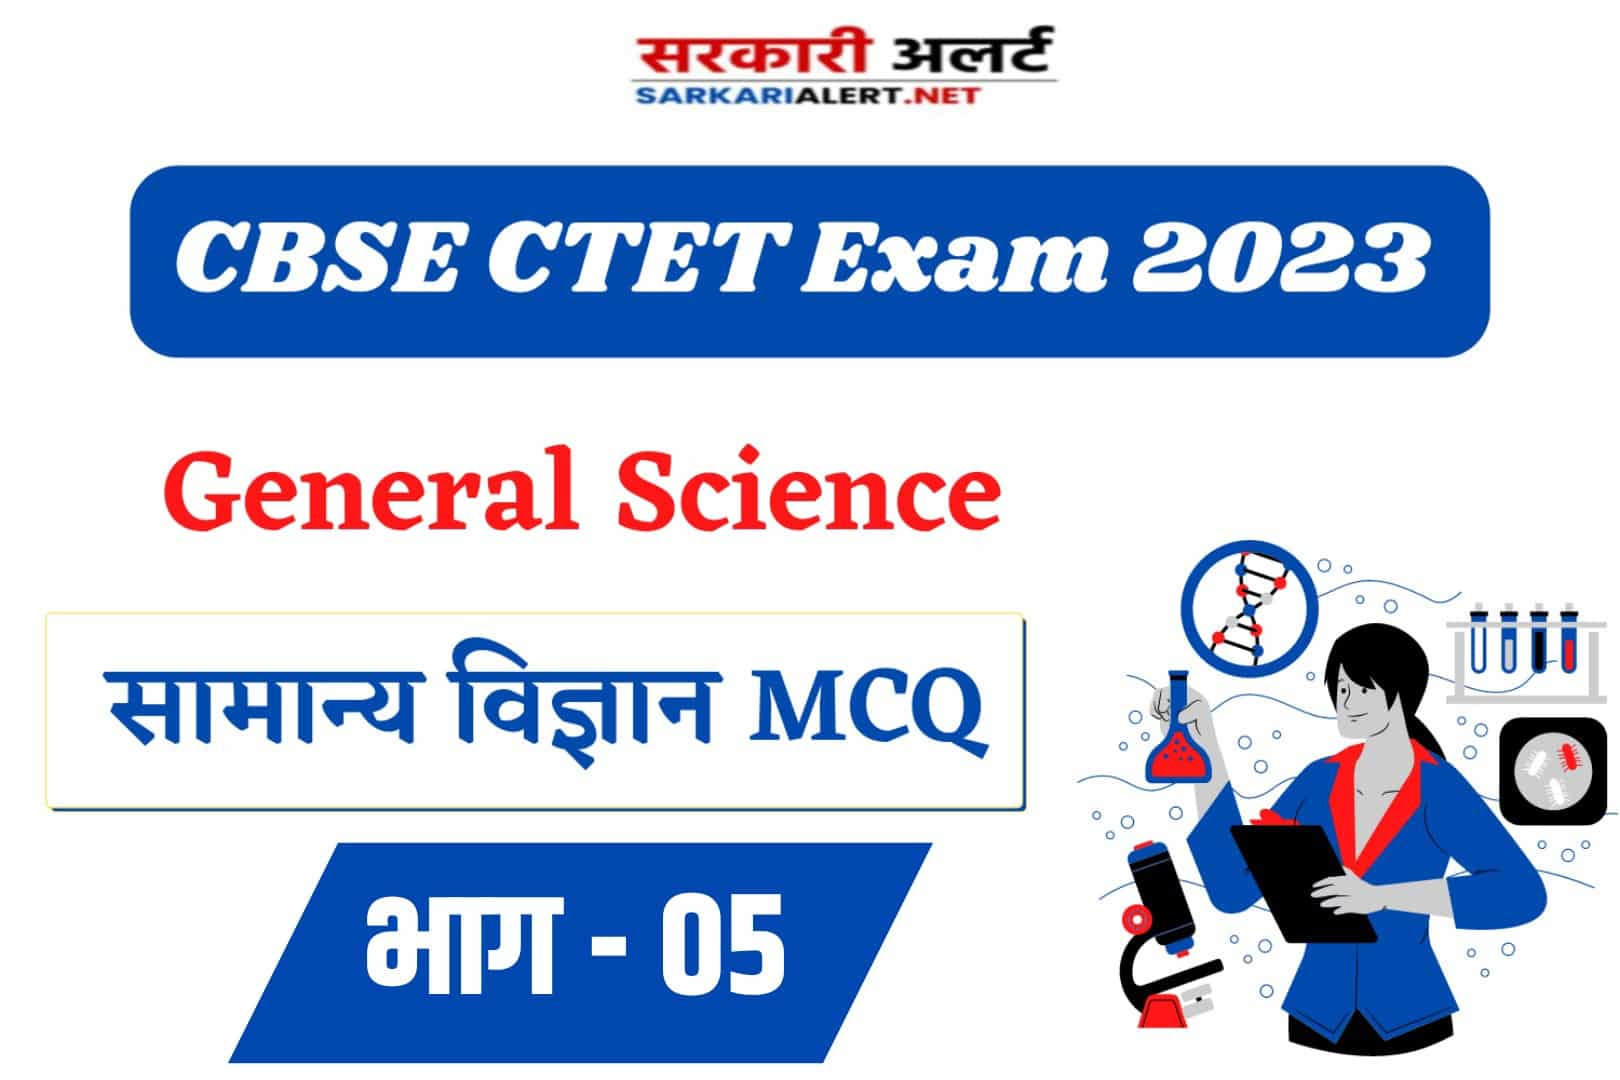 CBSE CTET Exam 2023, Science MCQ – 05 | सामान्य विज्ञान के महत्वपूर्ण MCQ